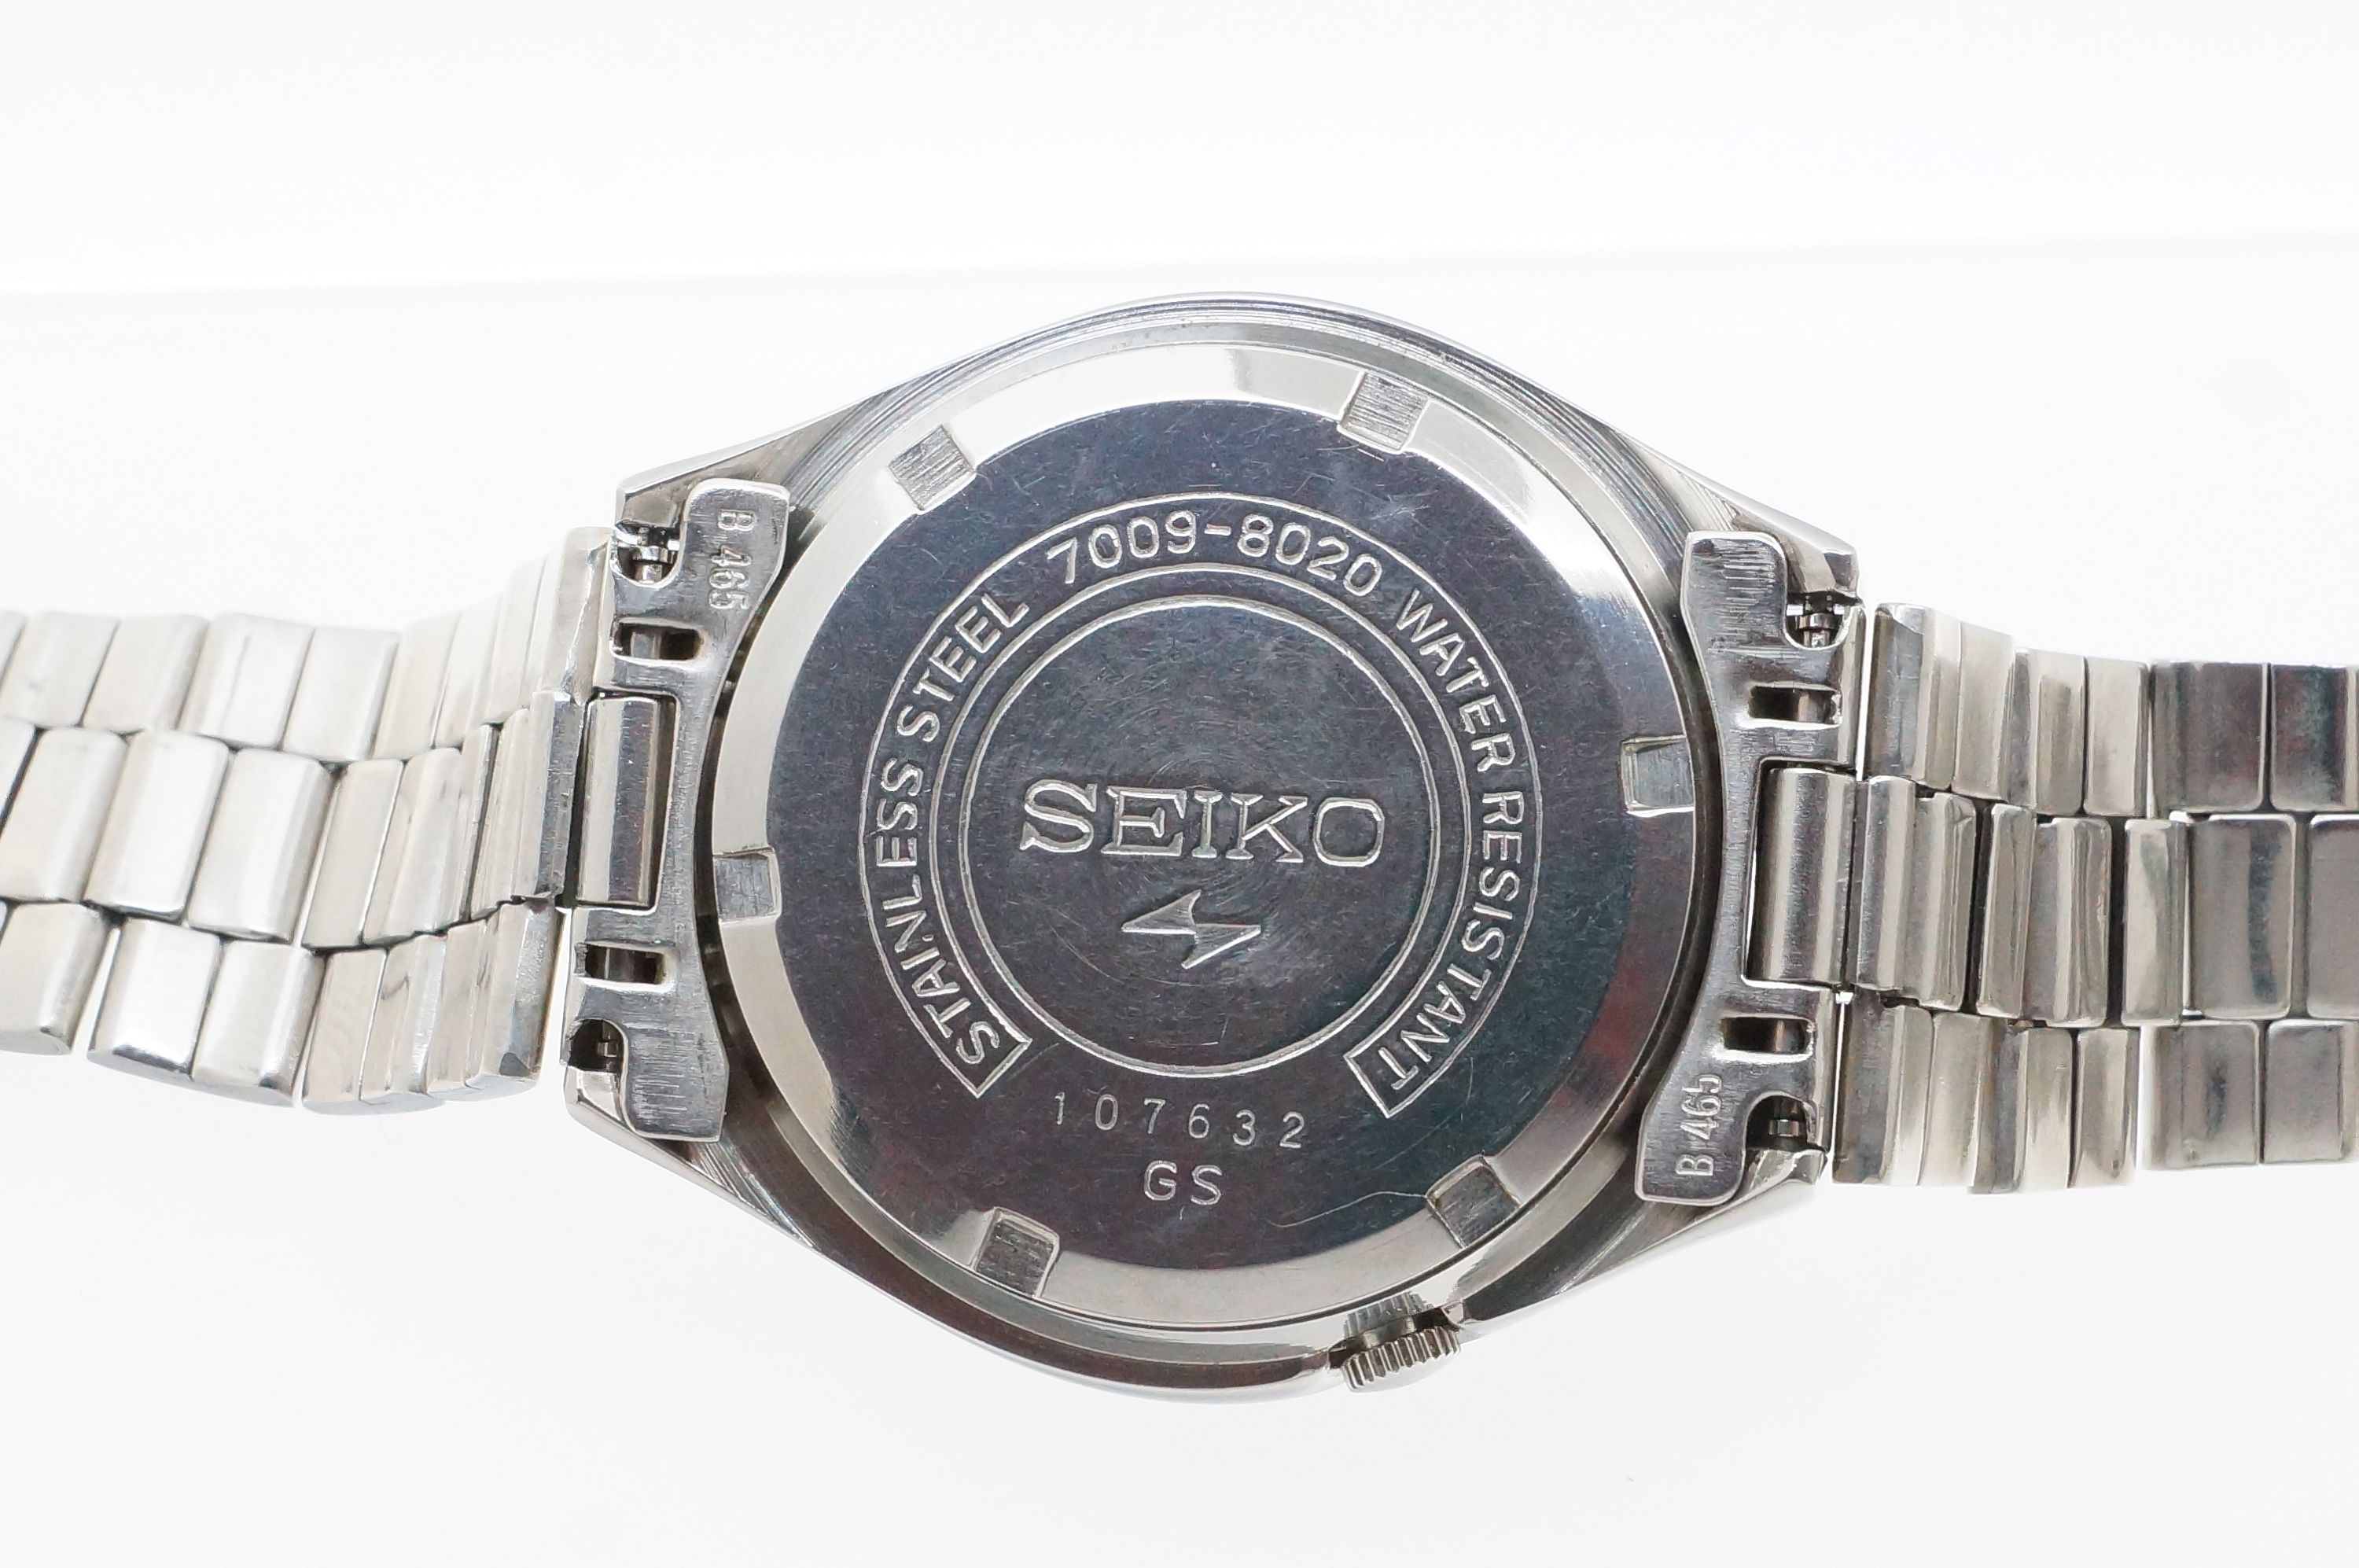 Seiko 5 Automatic Ref. 7009-8020 – Kaliber 7009A (1981)